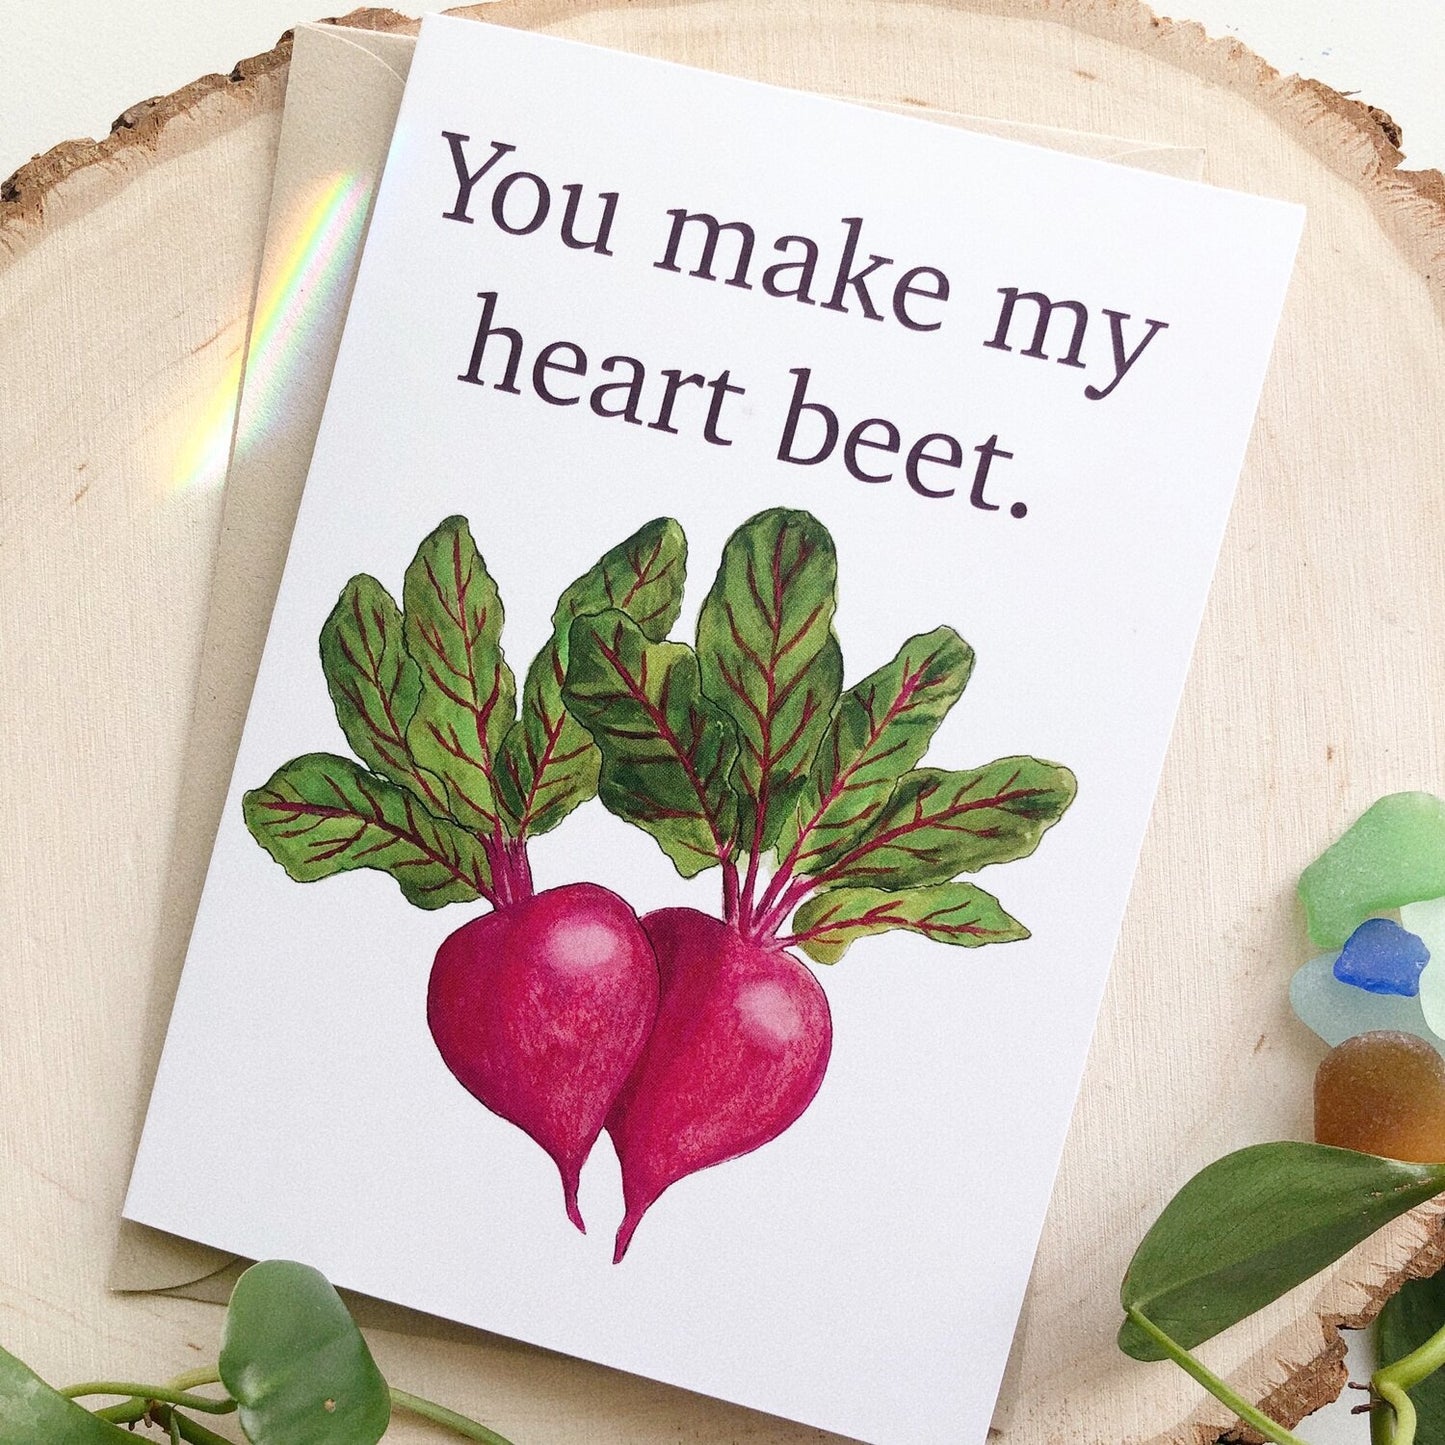 Heart Beet Card by Anya Toelle